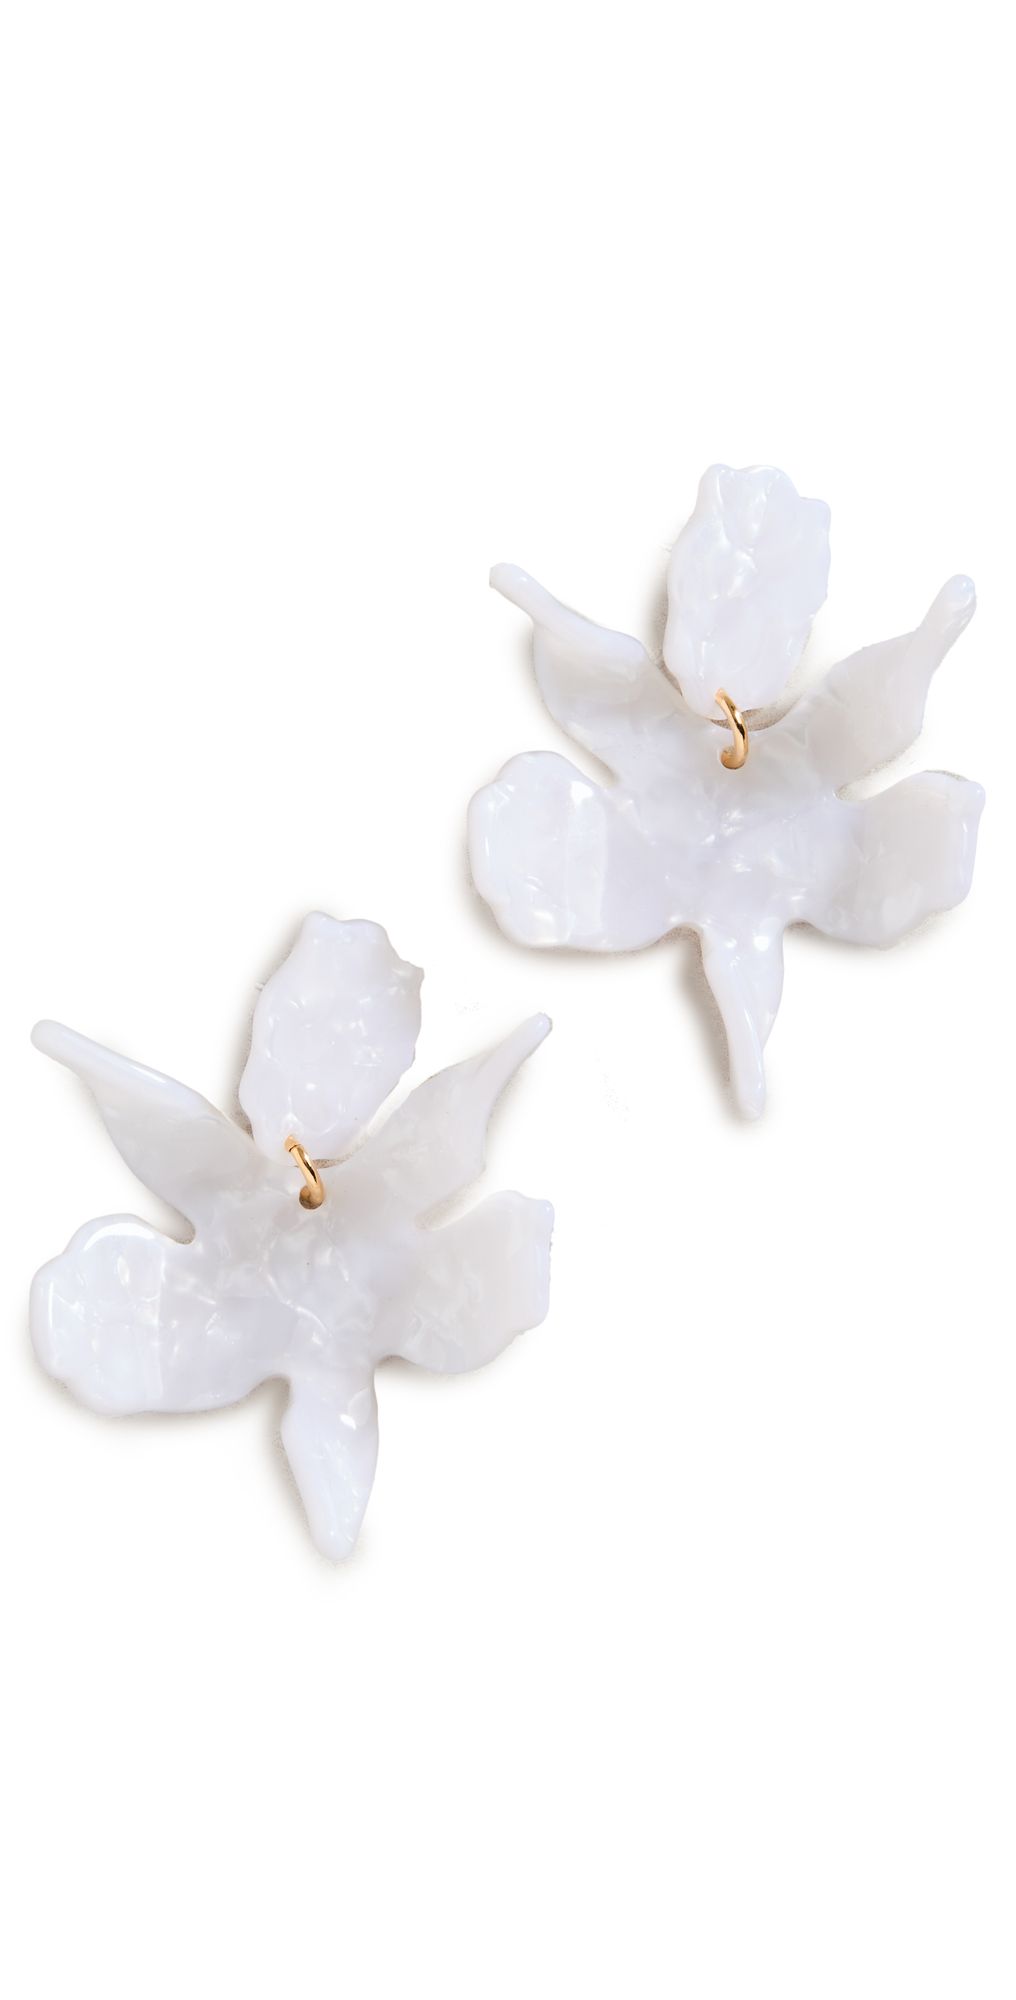 Lele Sadoughi Small Paper Lily Earrings | Shopbop